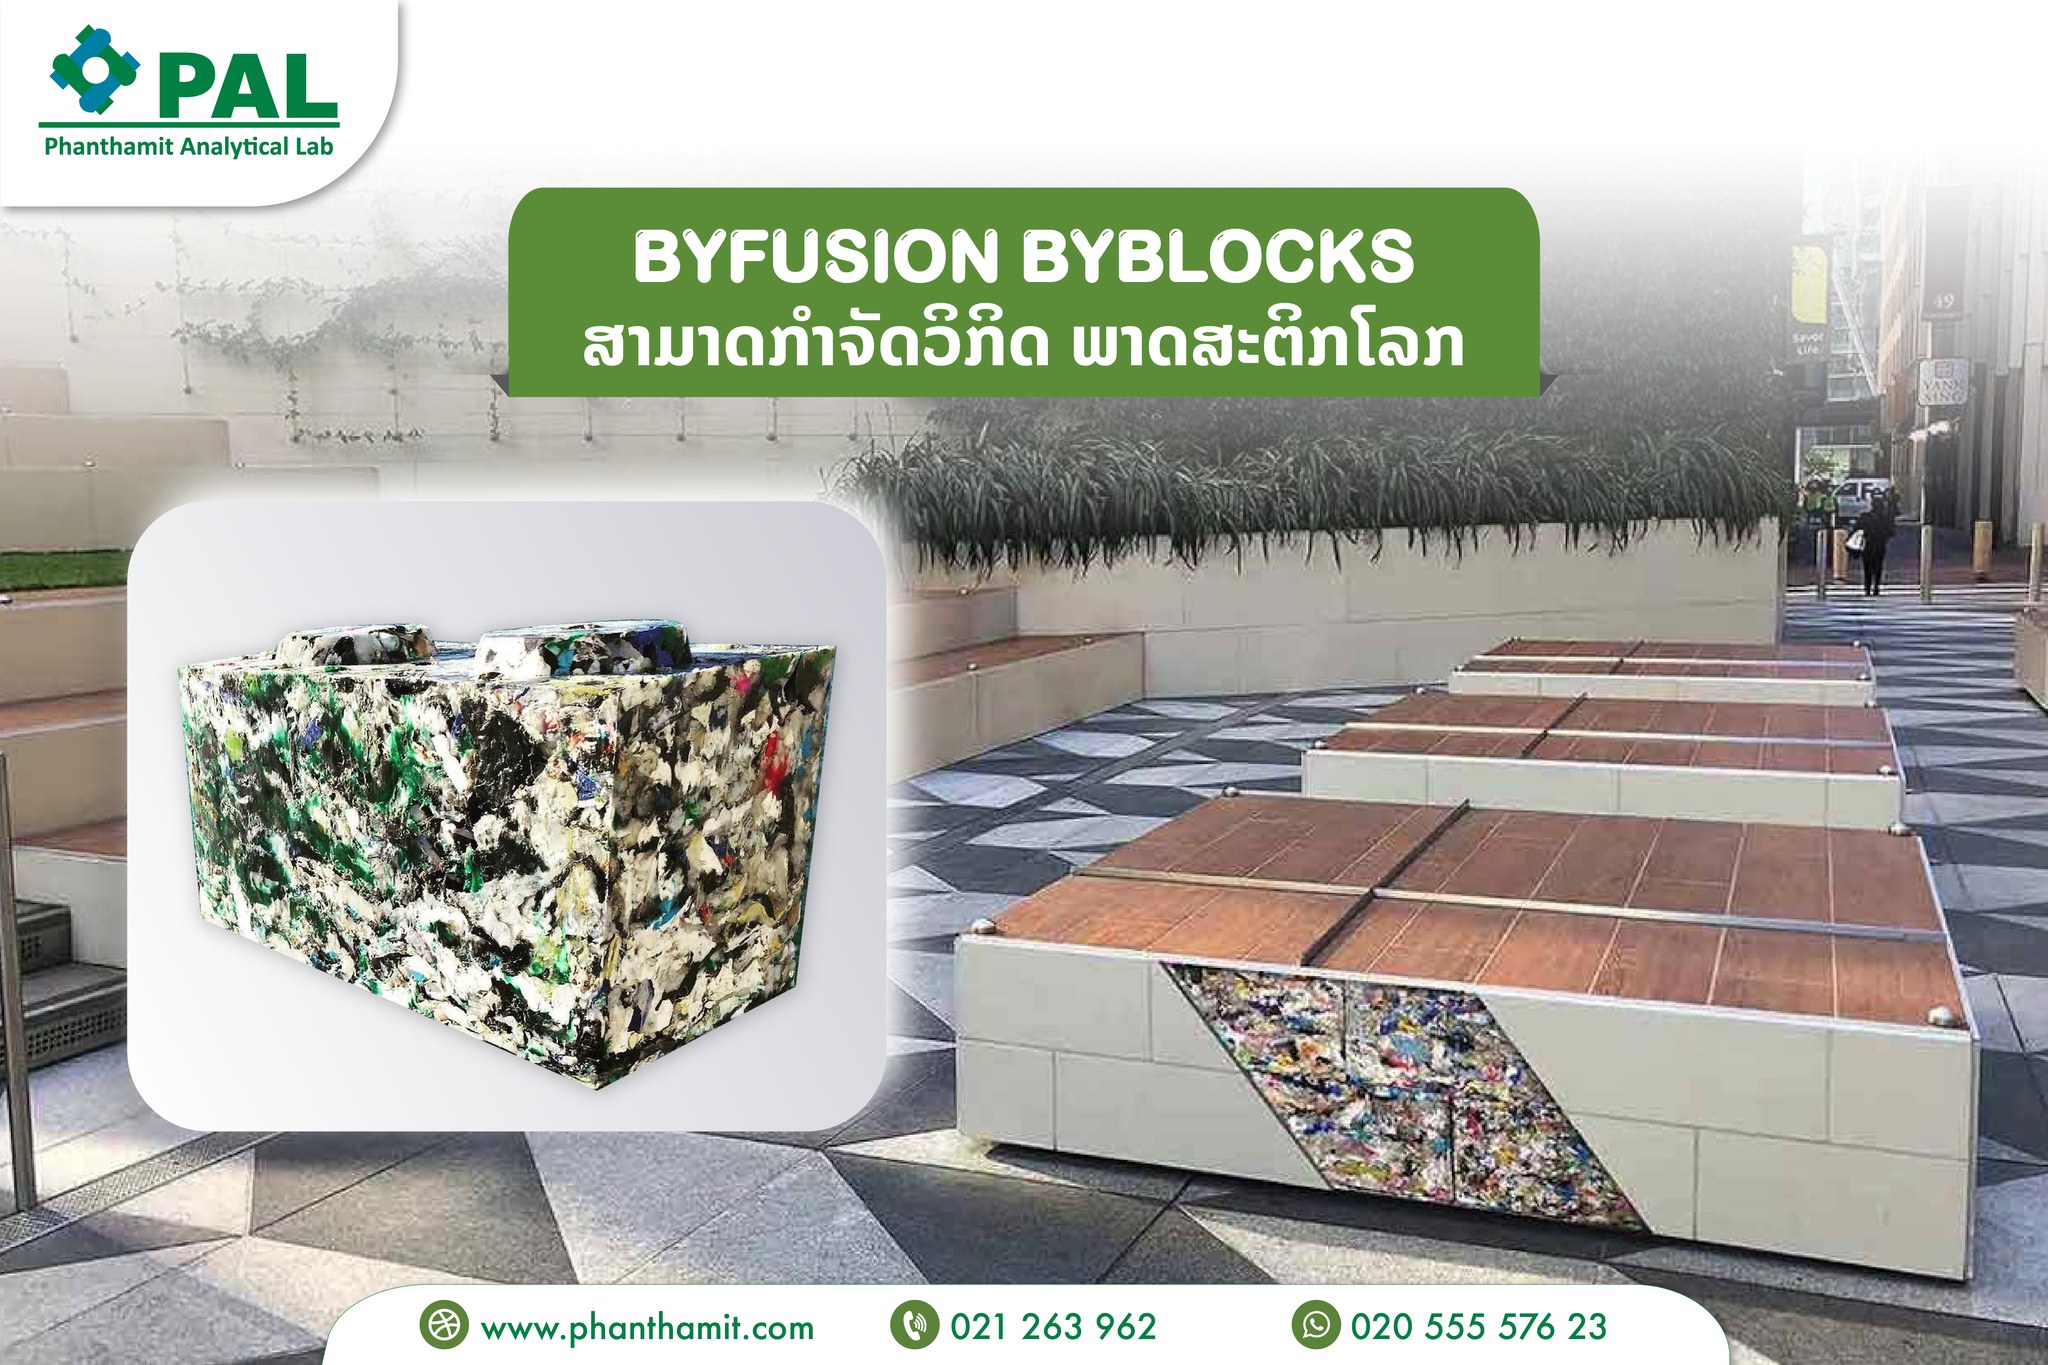 Byfusion byblocks